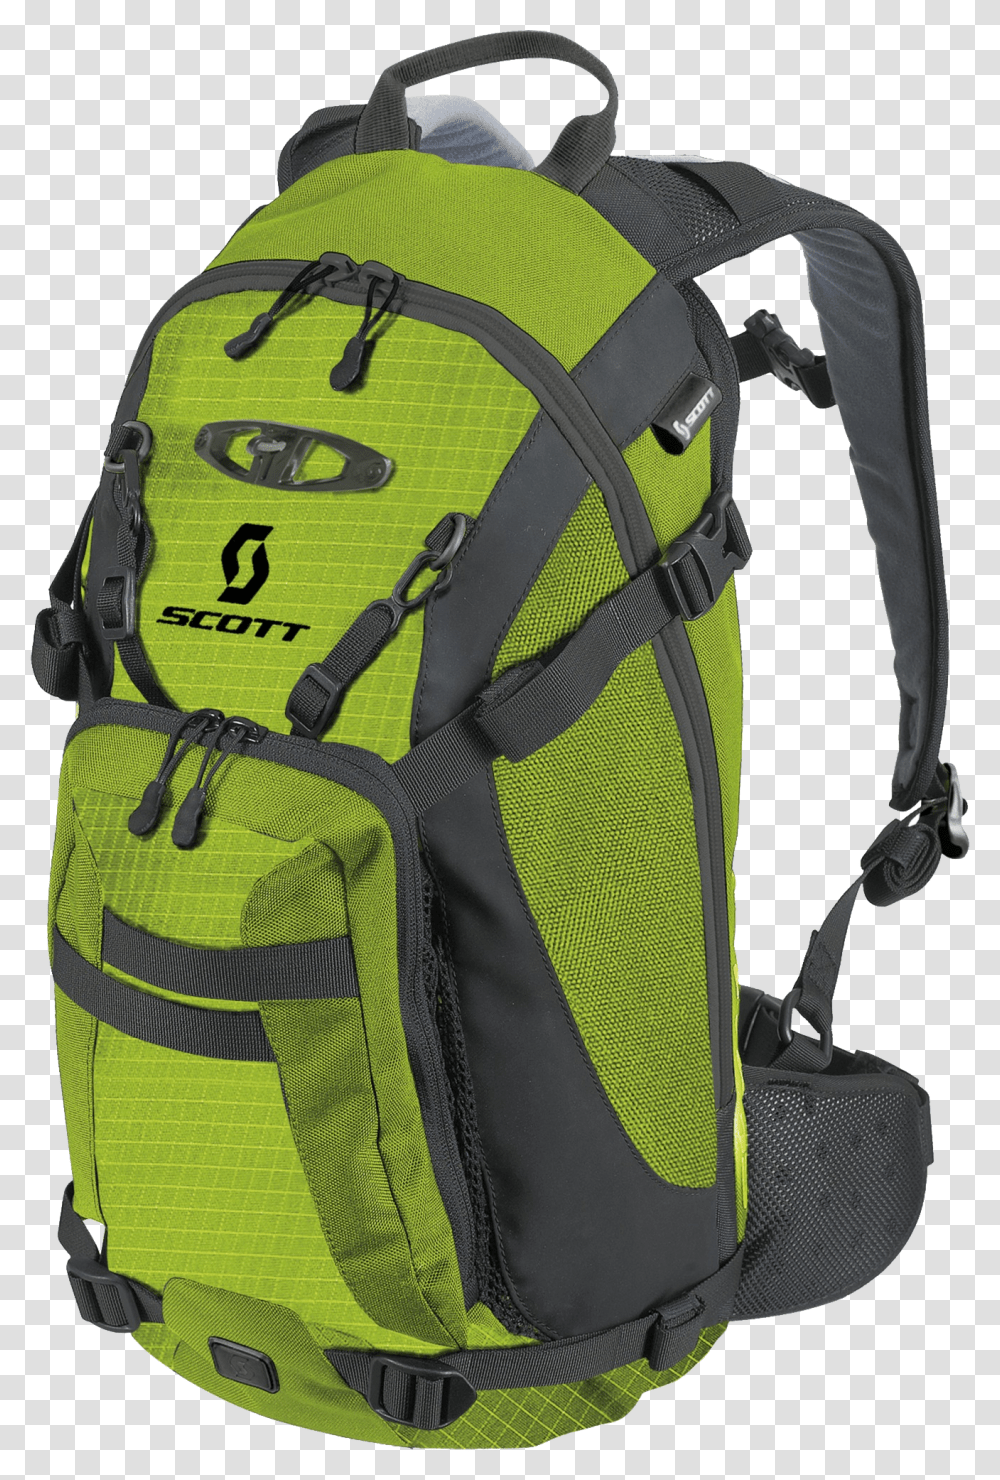 Scott Stylish Mini Tour Backpack Image Hiking Backpack Background, Bag Transparent Png